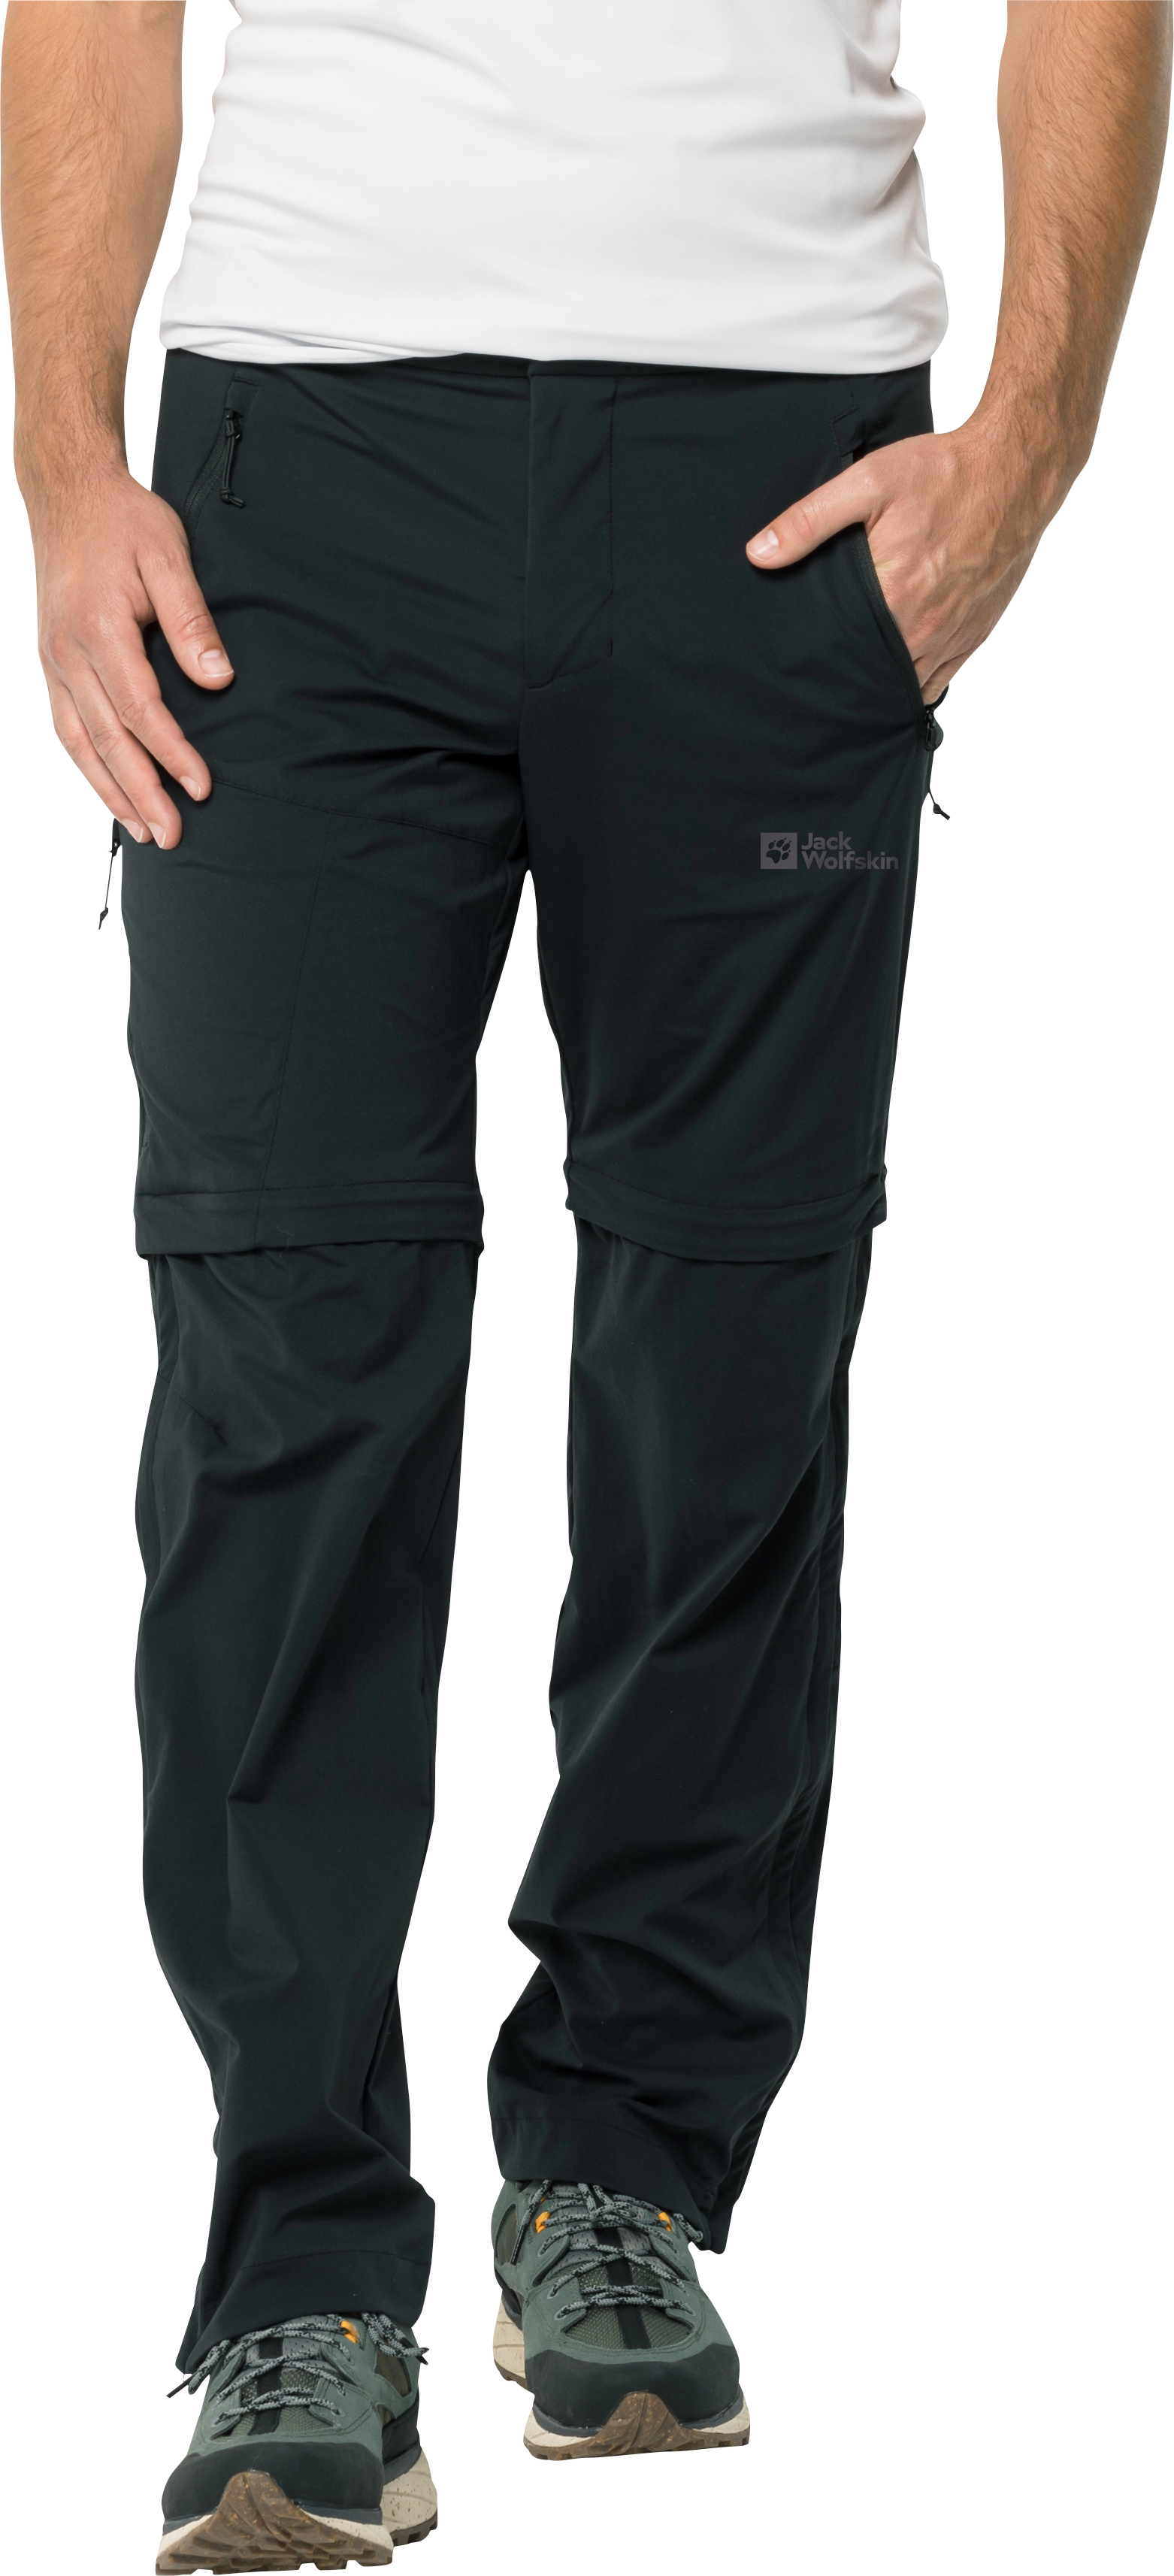 | Black Away Pants Men\'s Glastal Zip Outnorth | Men\'s Buy Away here Pants Black Glastal Zip